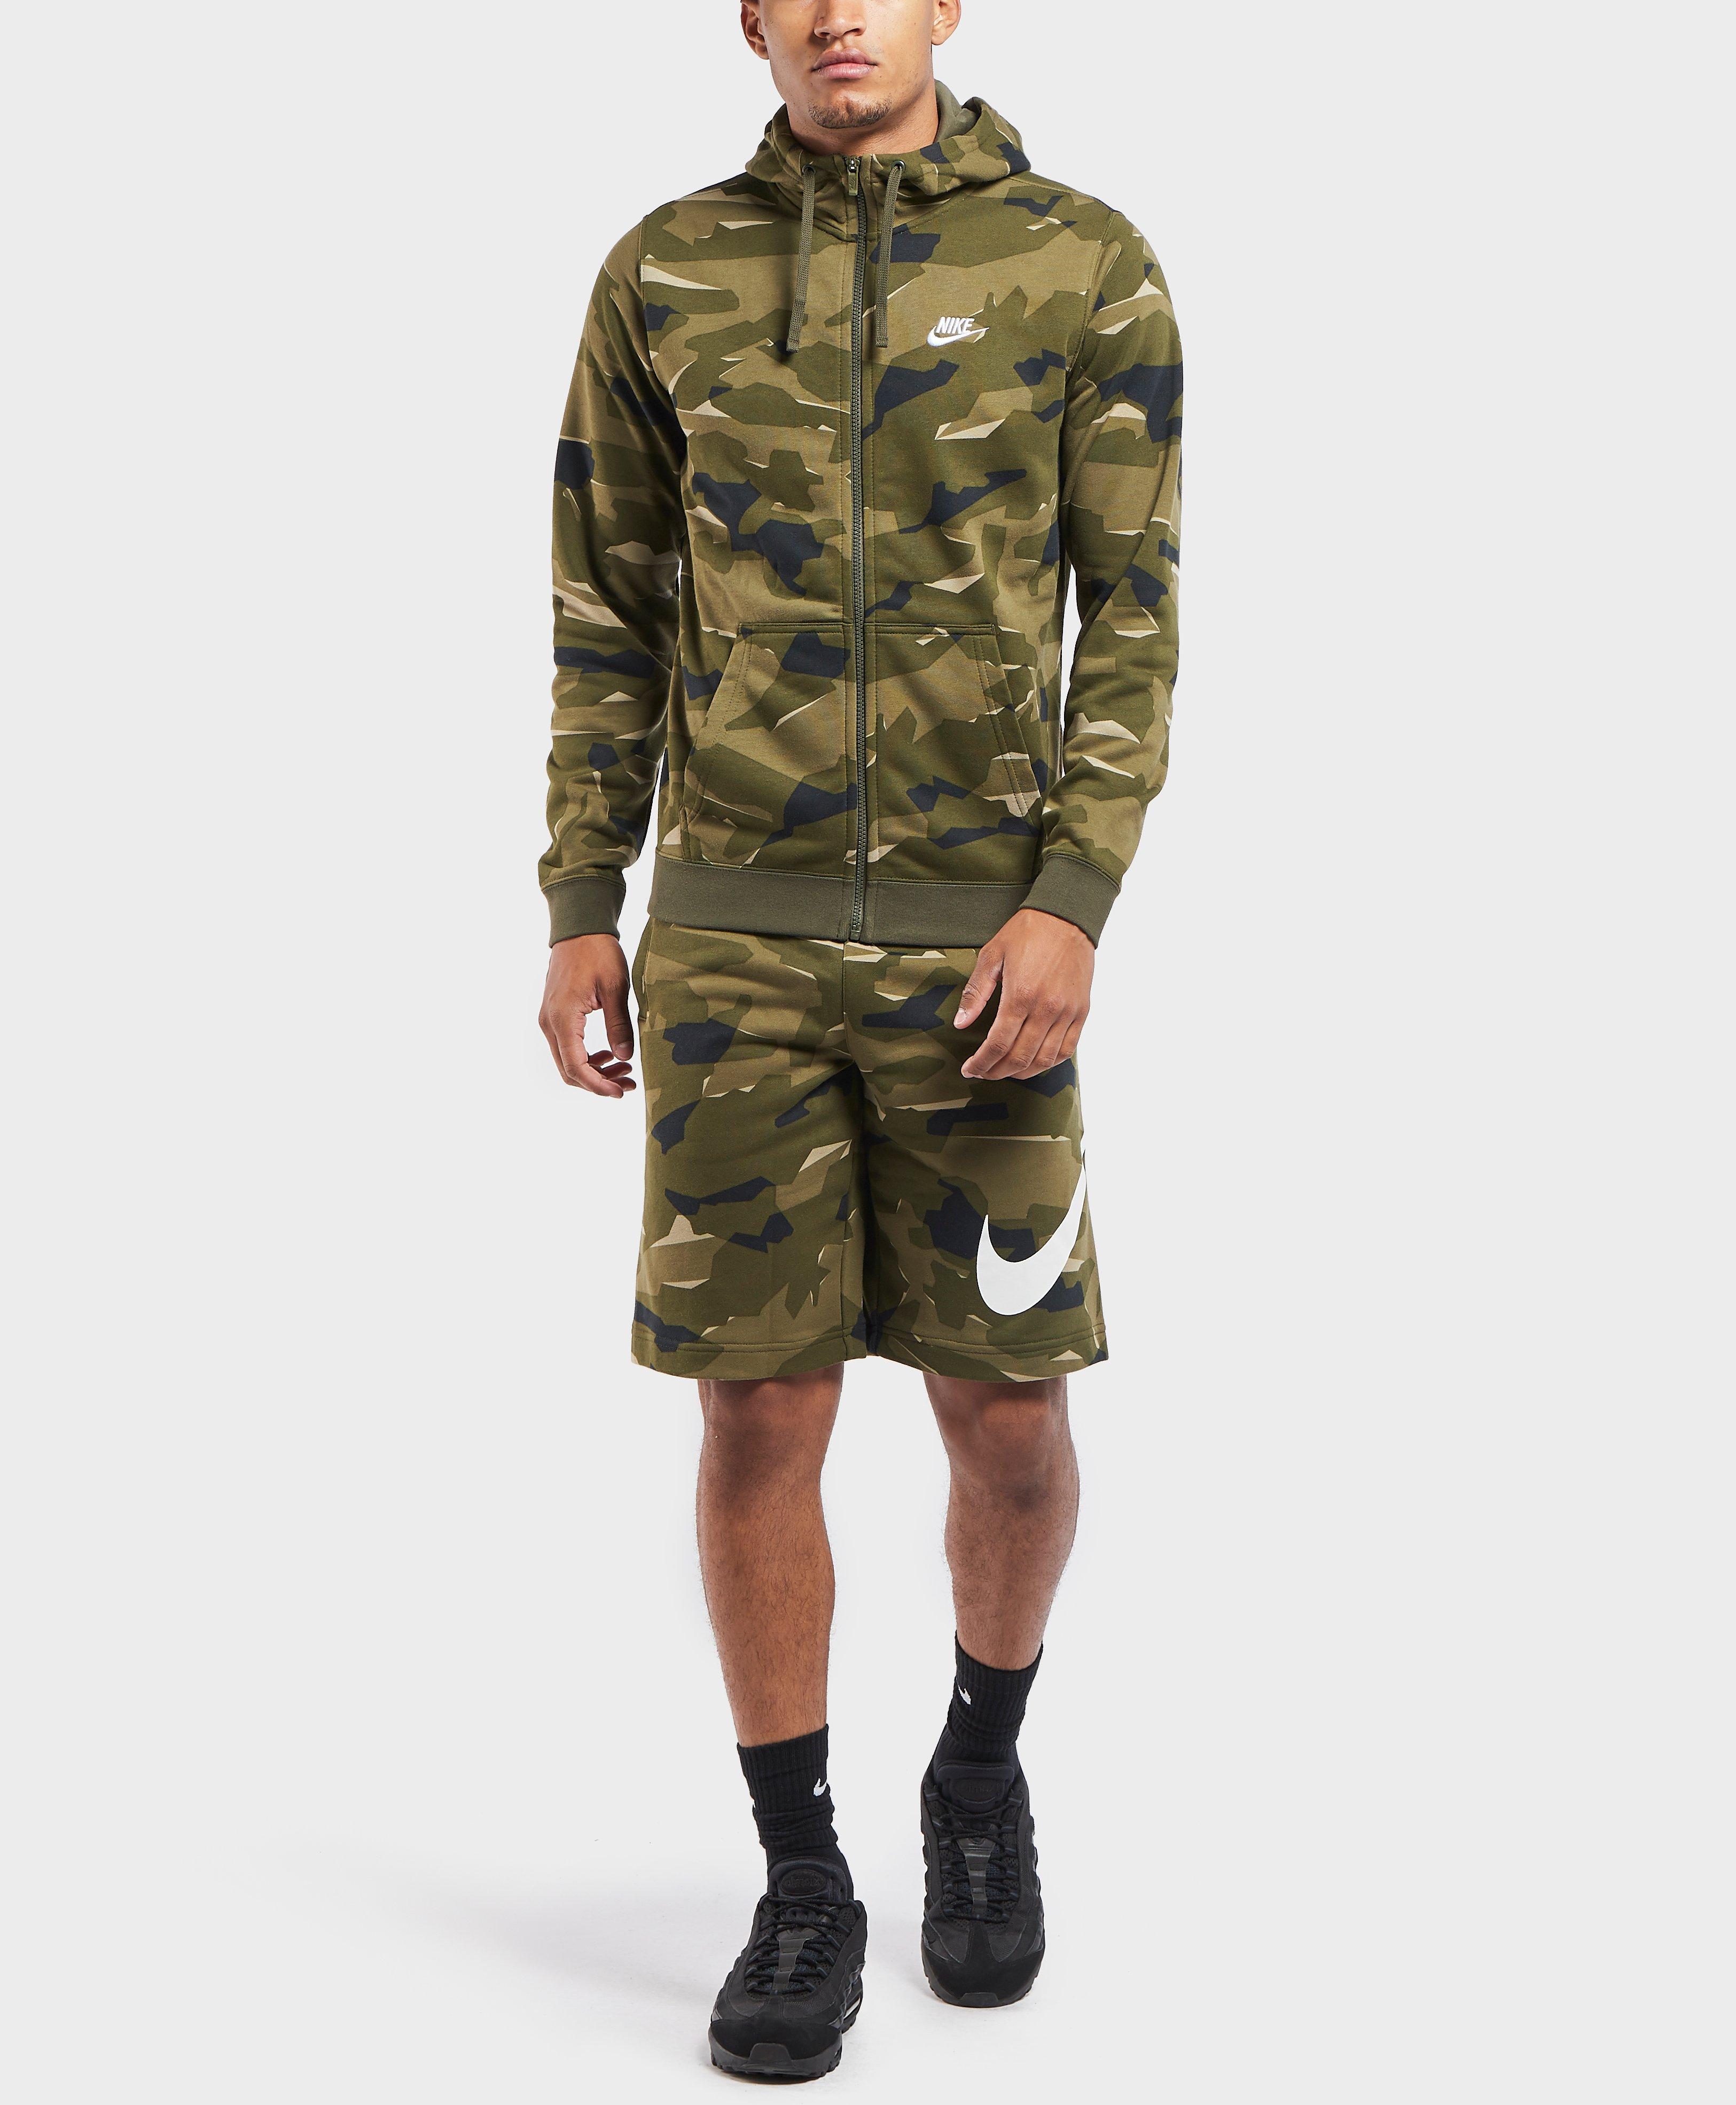 Nike Cotton Camo Futura Full Zip Hoodie in Green for Men - Lyst